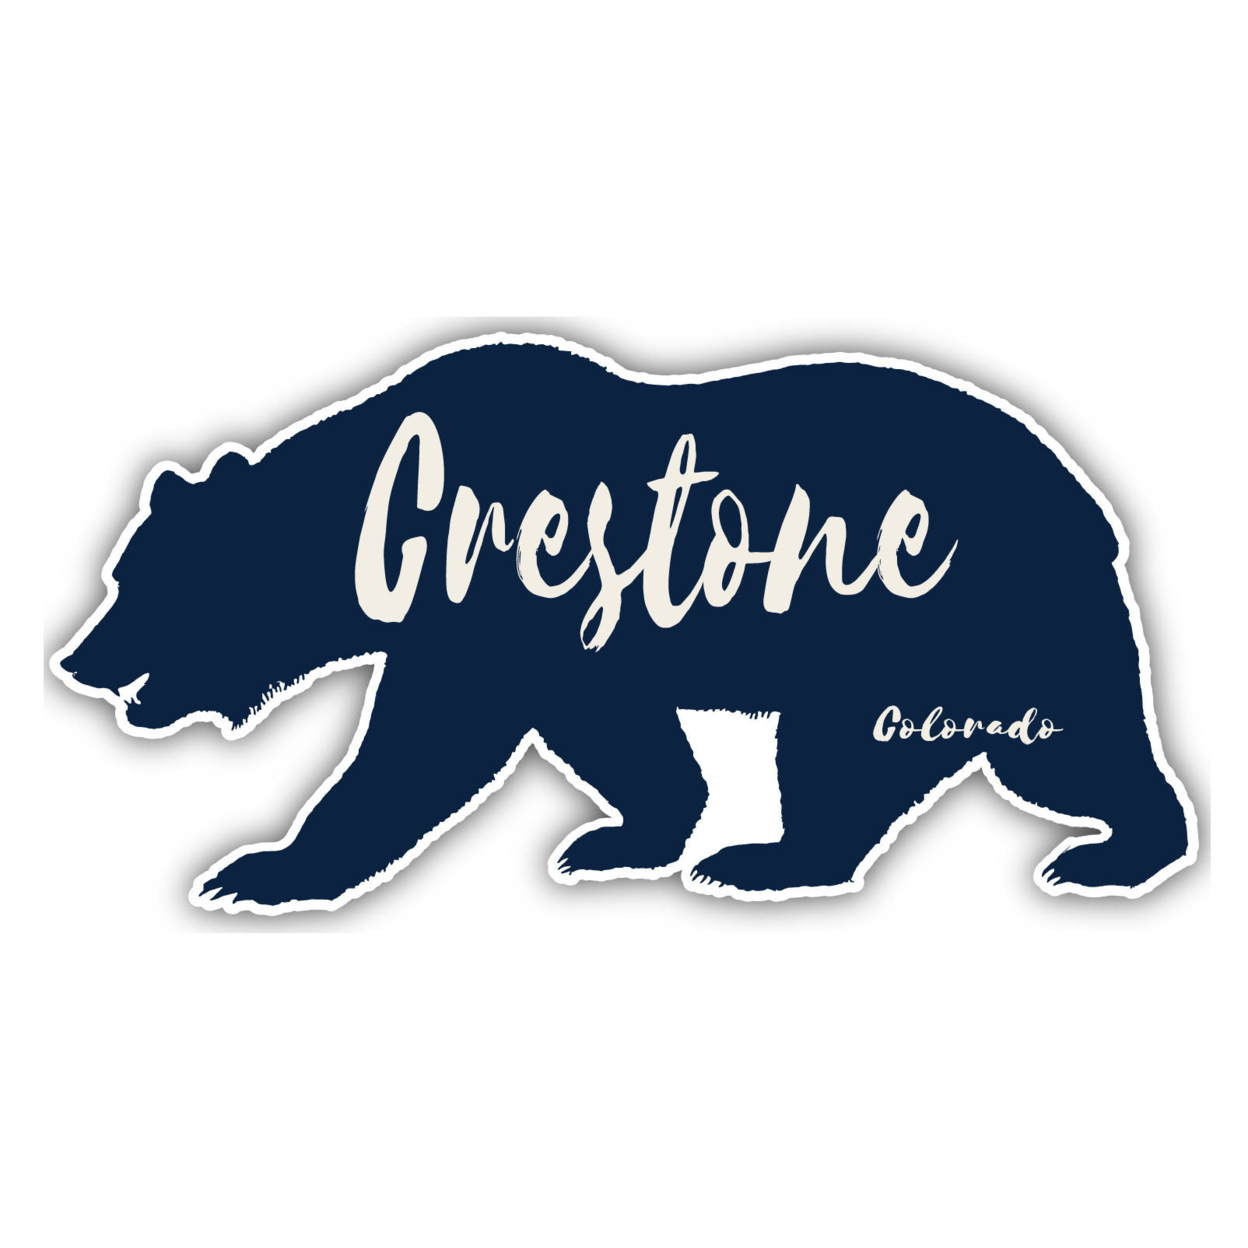 Crestone Colorado Souvenir Decorative Stickers (Choose Theme And Size) - 4-Pack, 4-Inch, Camp Life